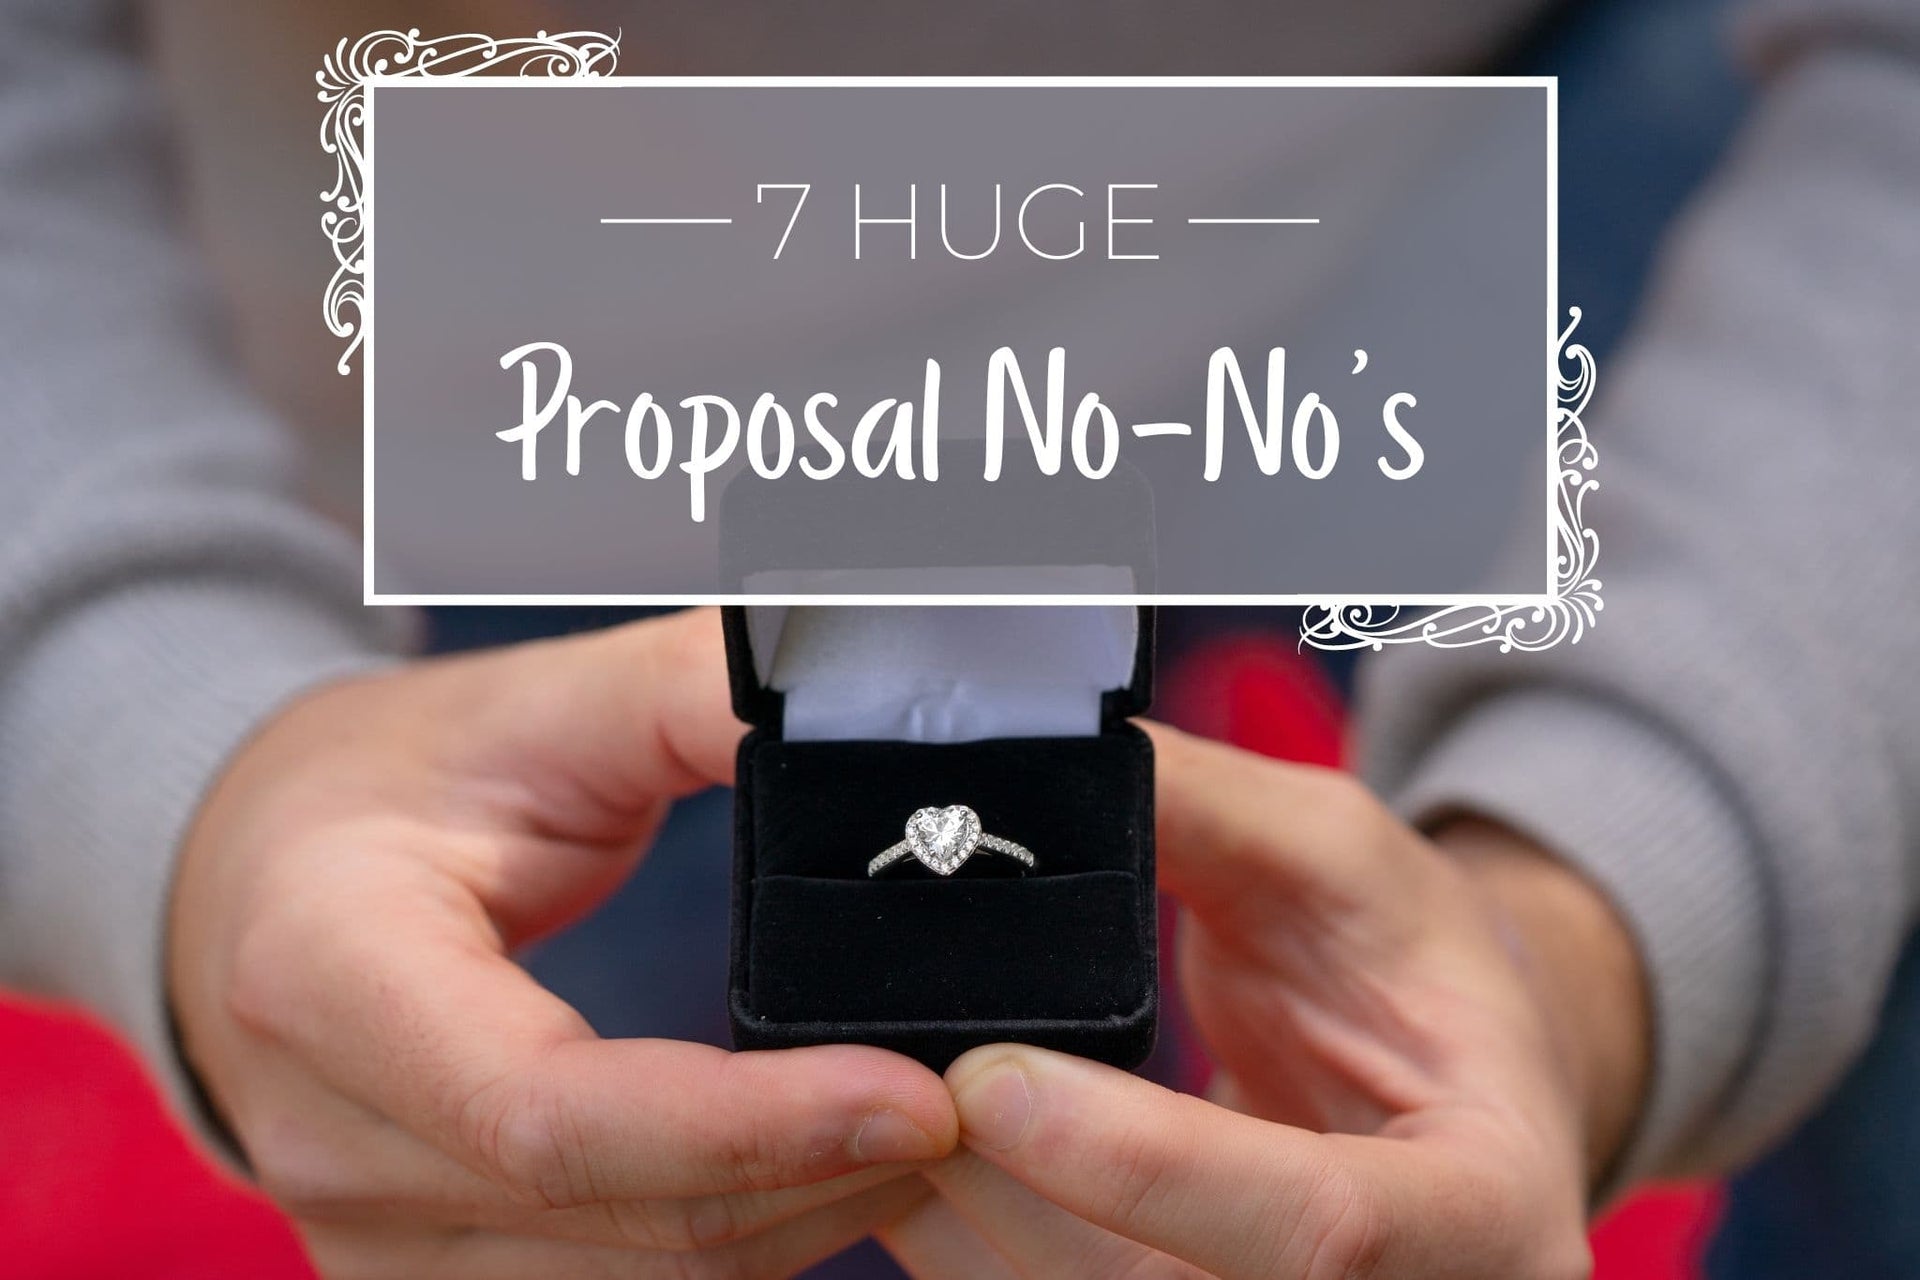 7 HUGE Proposal No-No’s